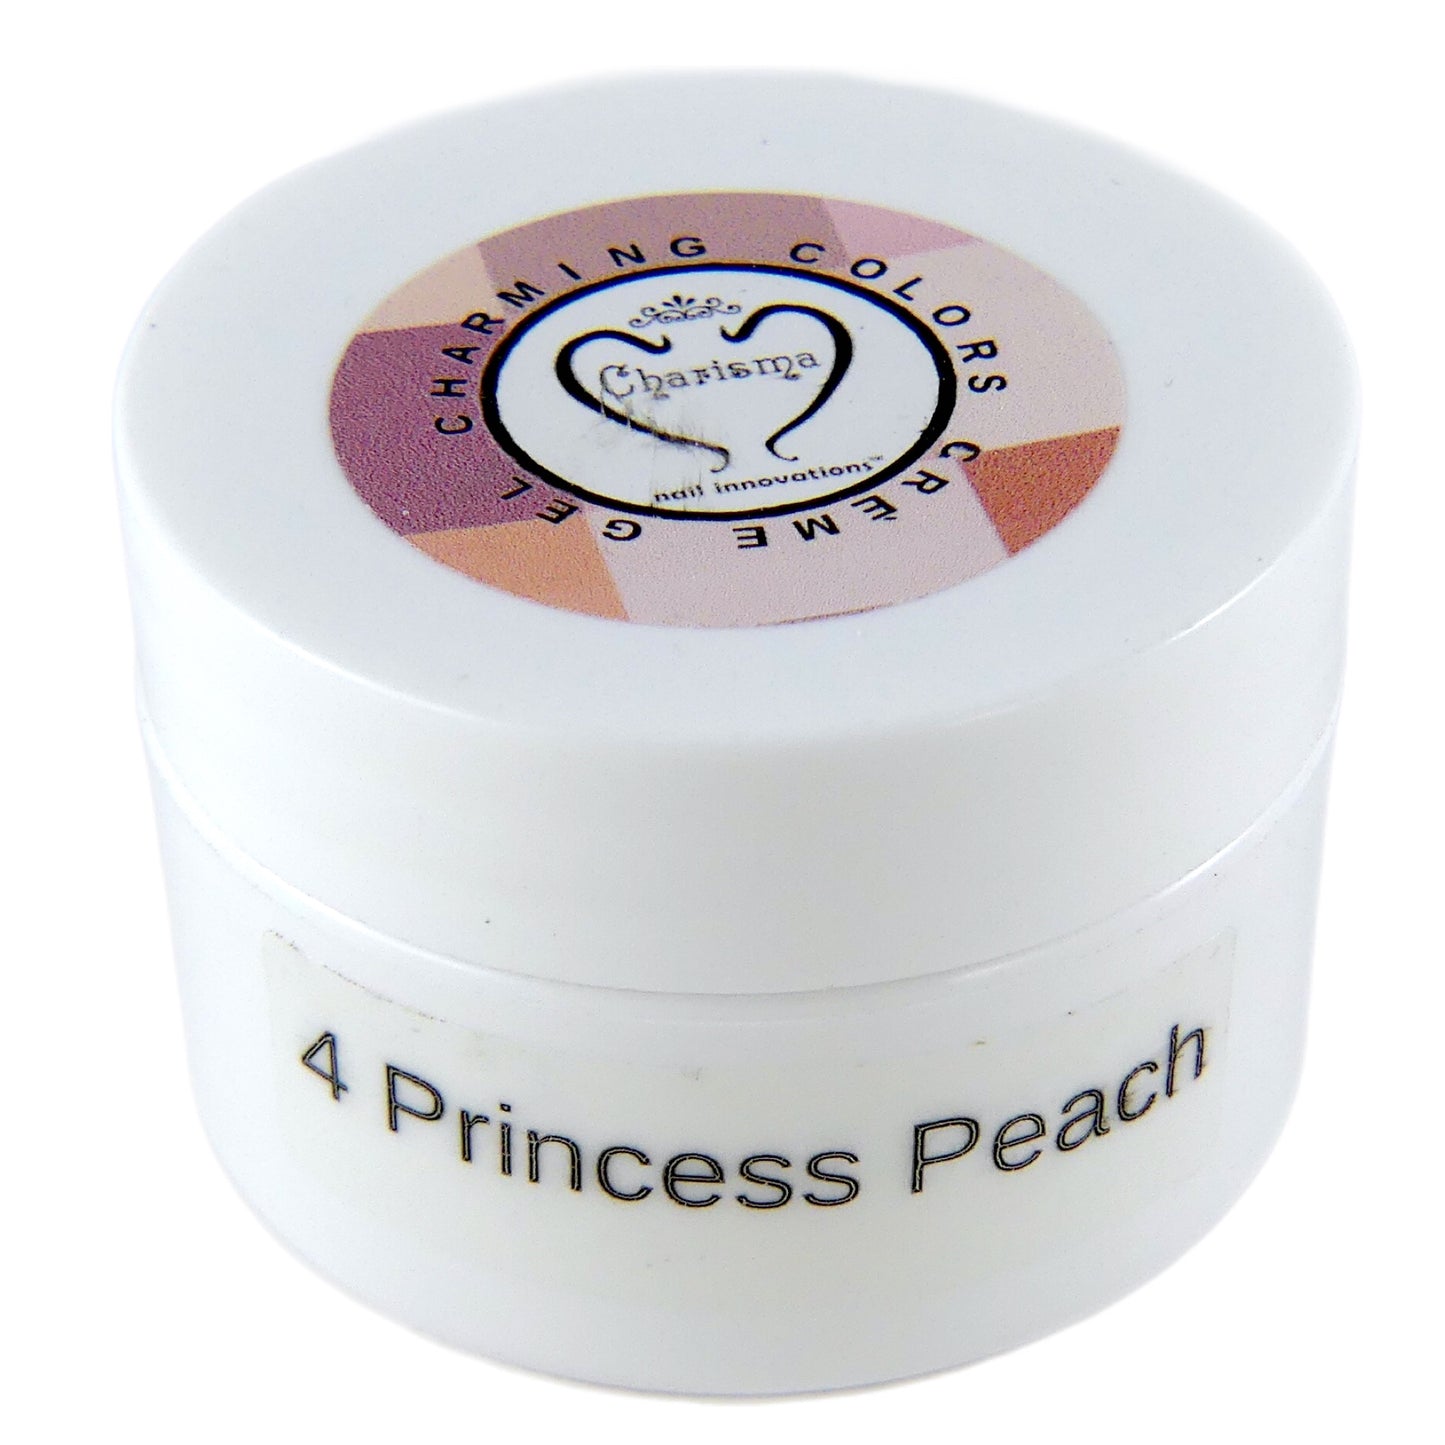 Builder Gel (Princess Peach #4) 1/2 oz - My Little Nail Art Shop